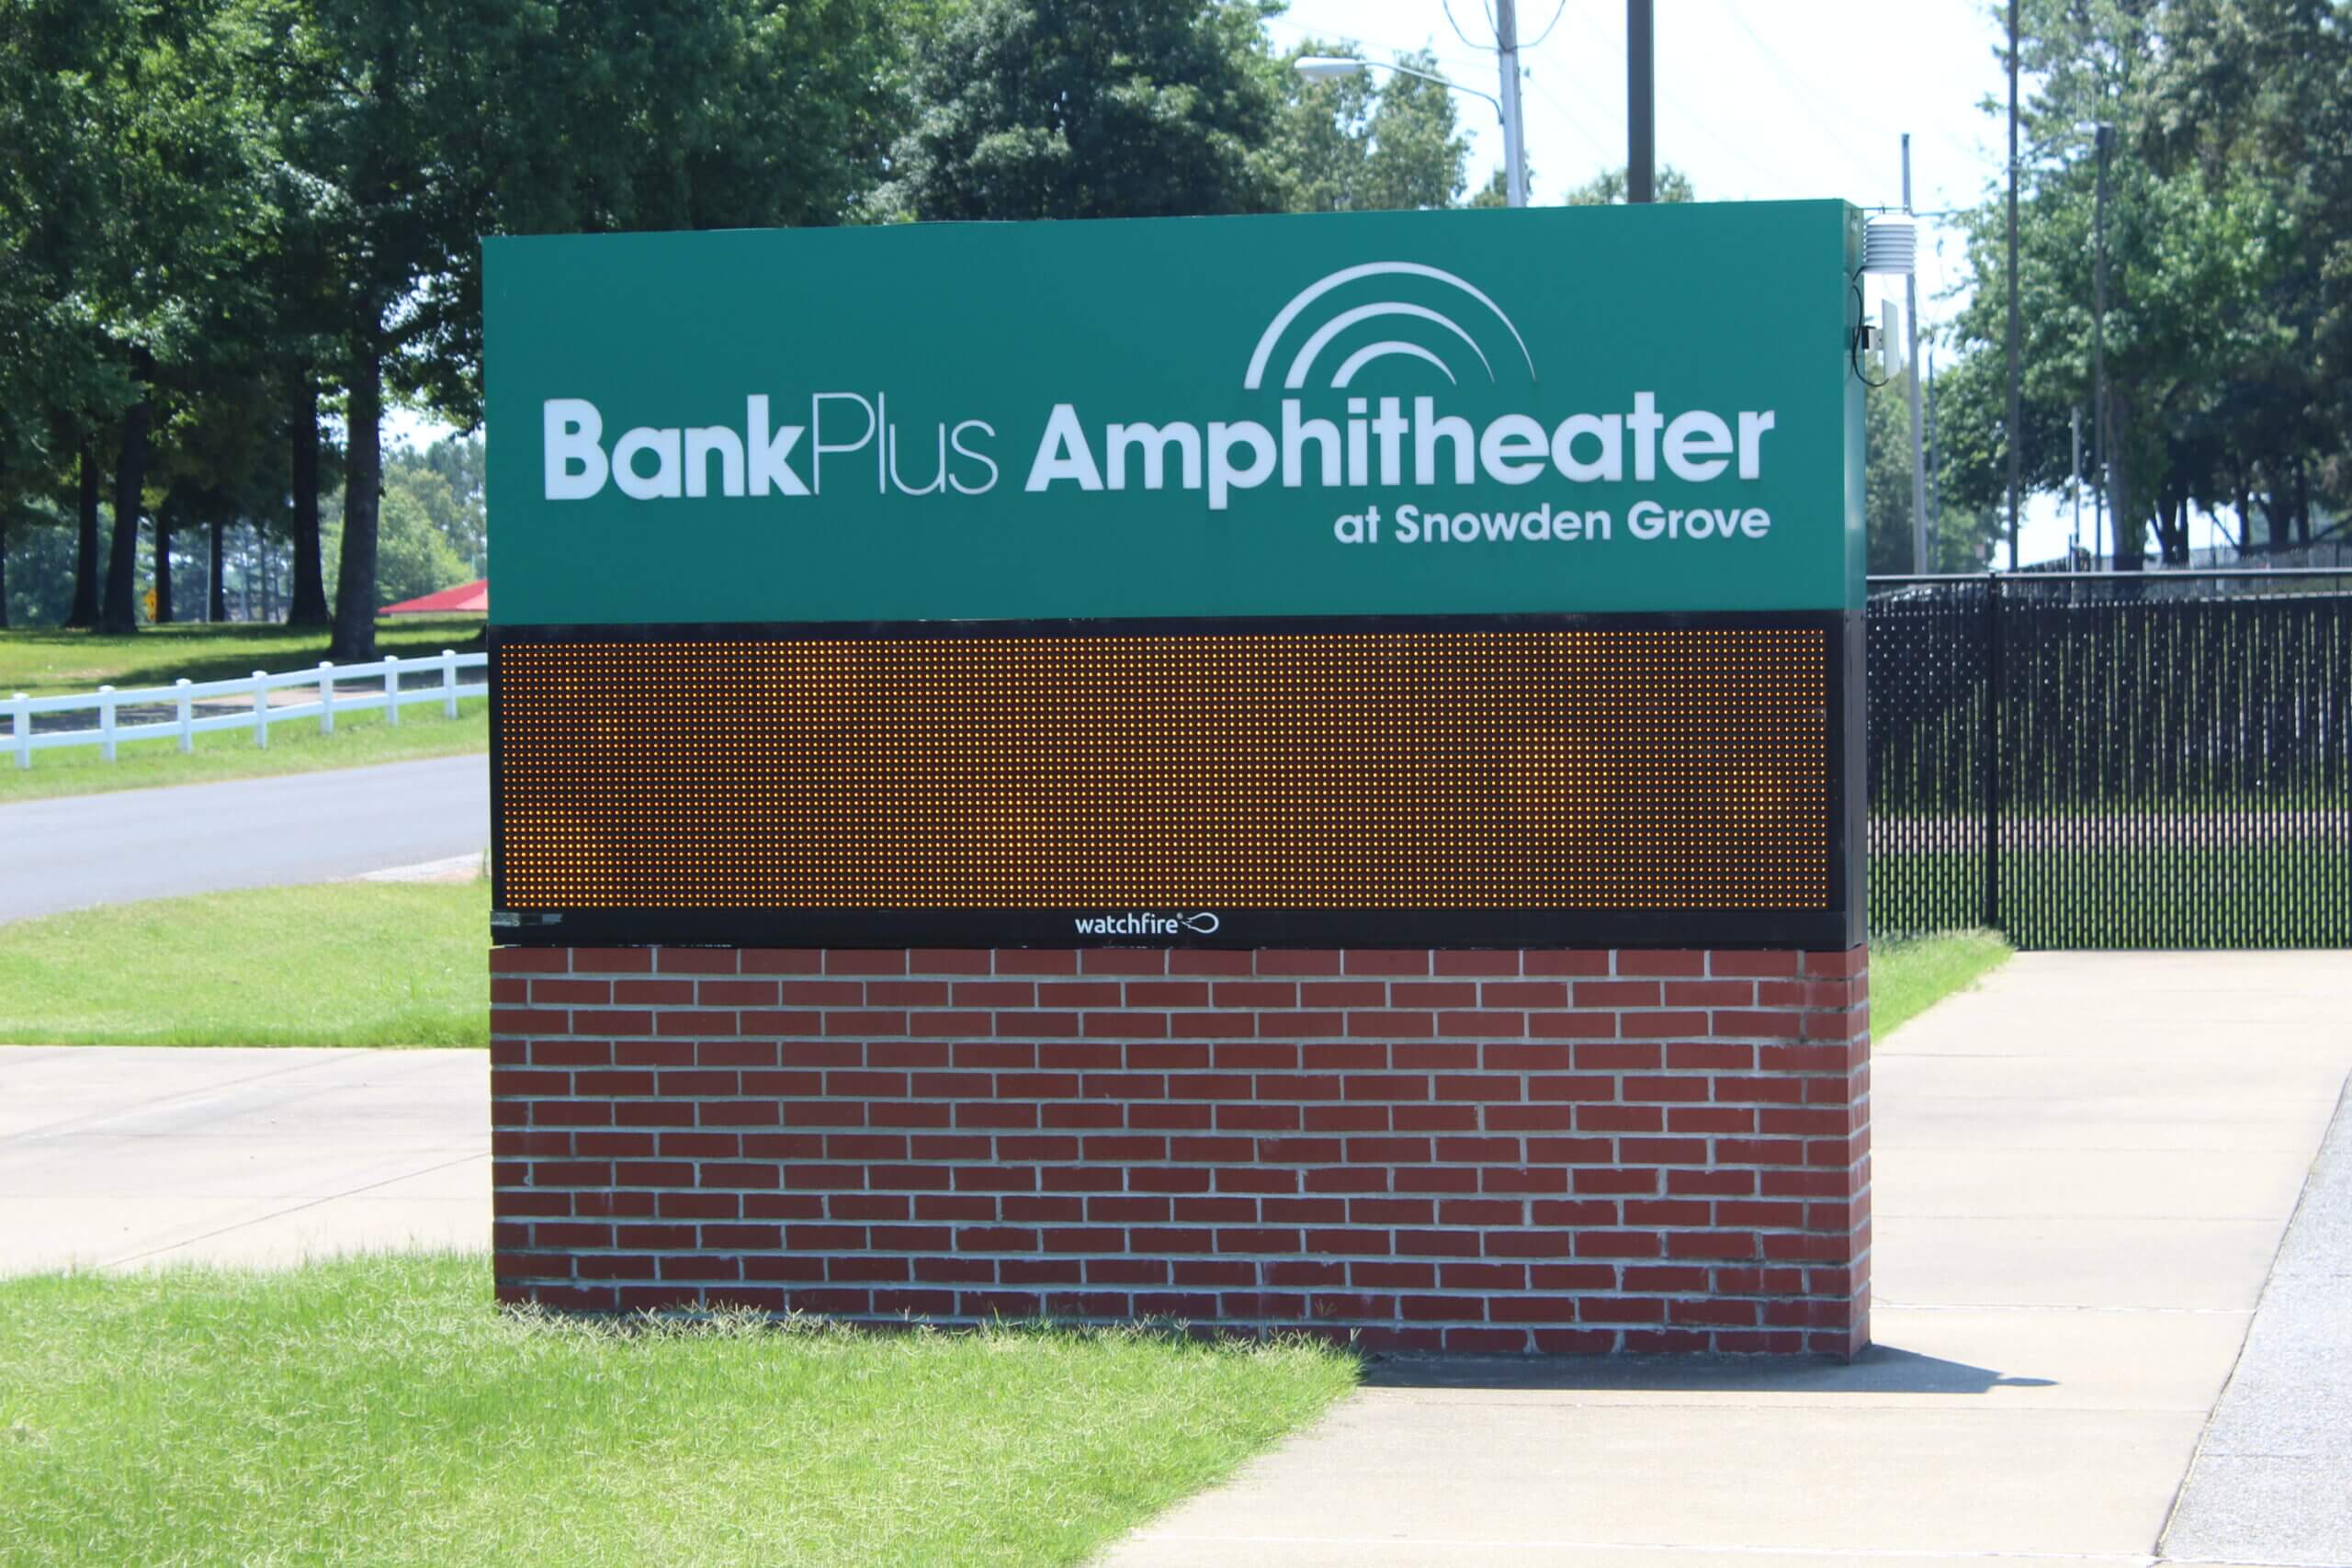 BankPlus Amphitheater to expand